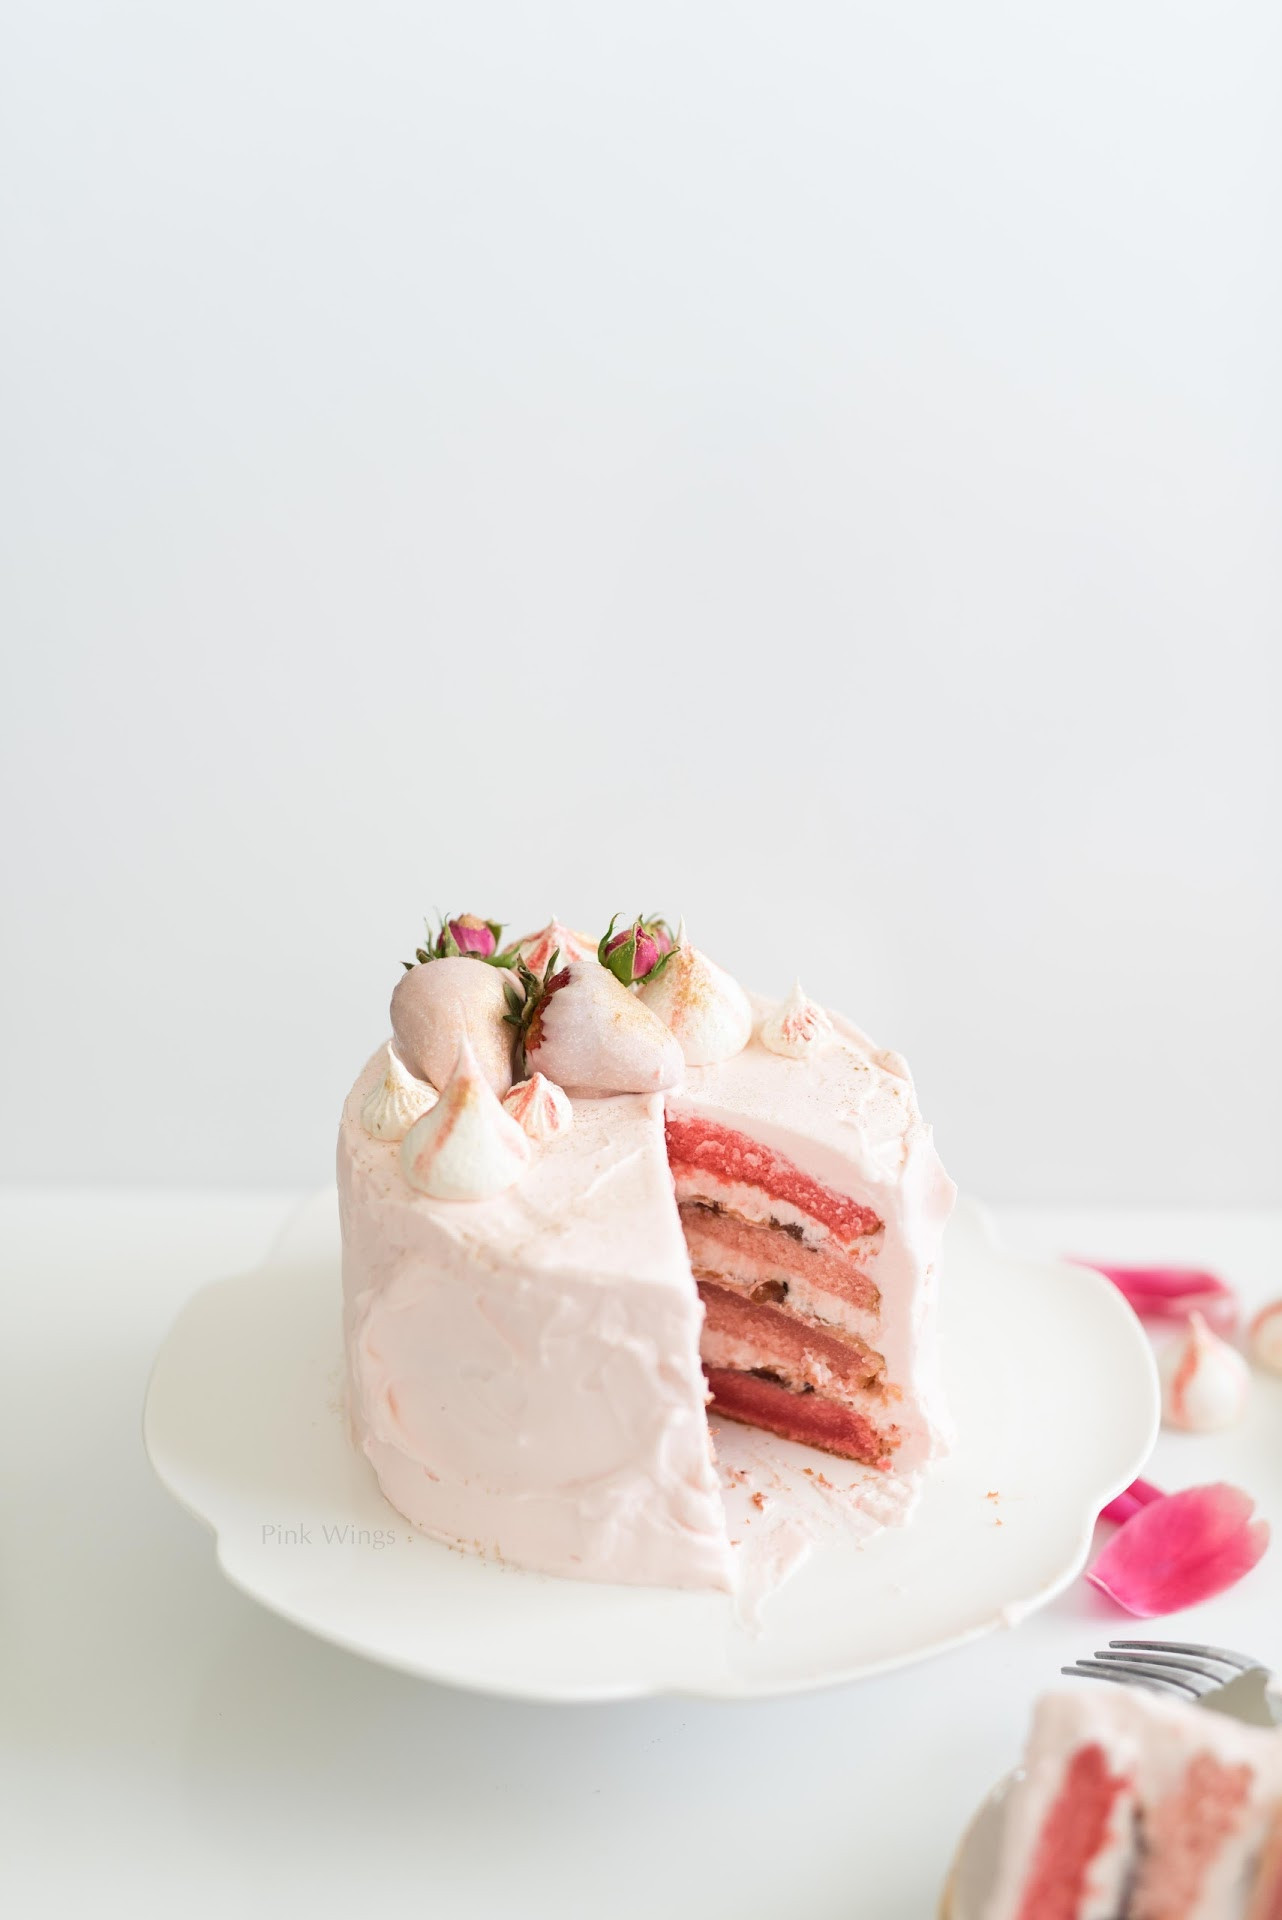 Strawberry Birthday Cake Recipes
 Strawberry Cake Recipe The 36th AVENUE